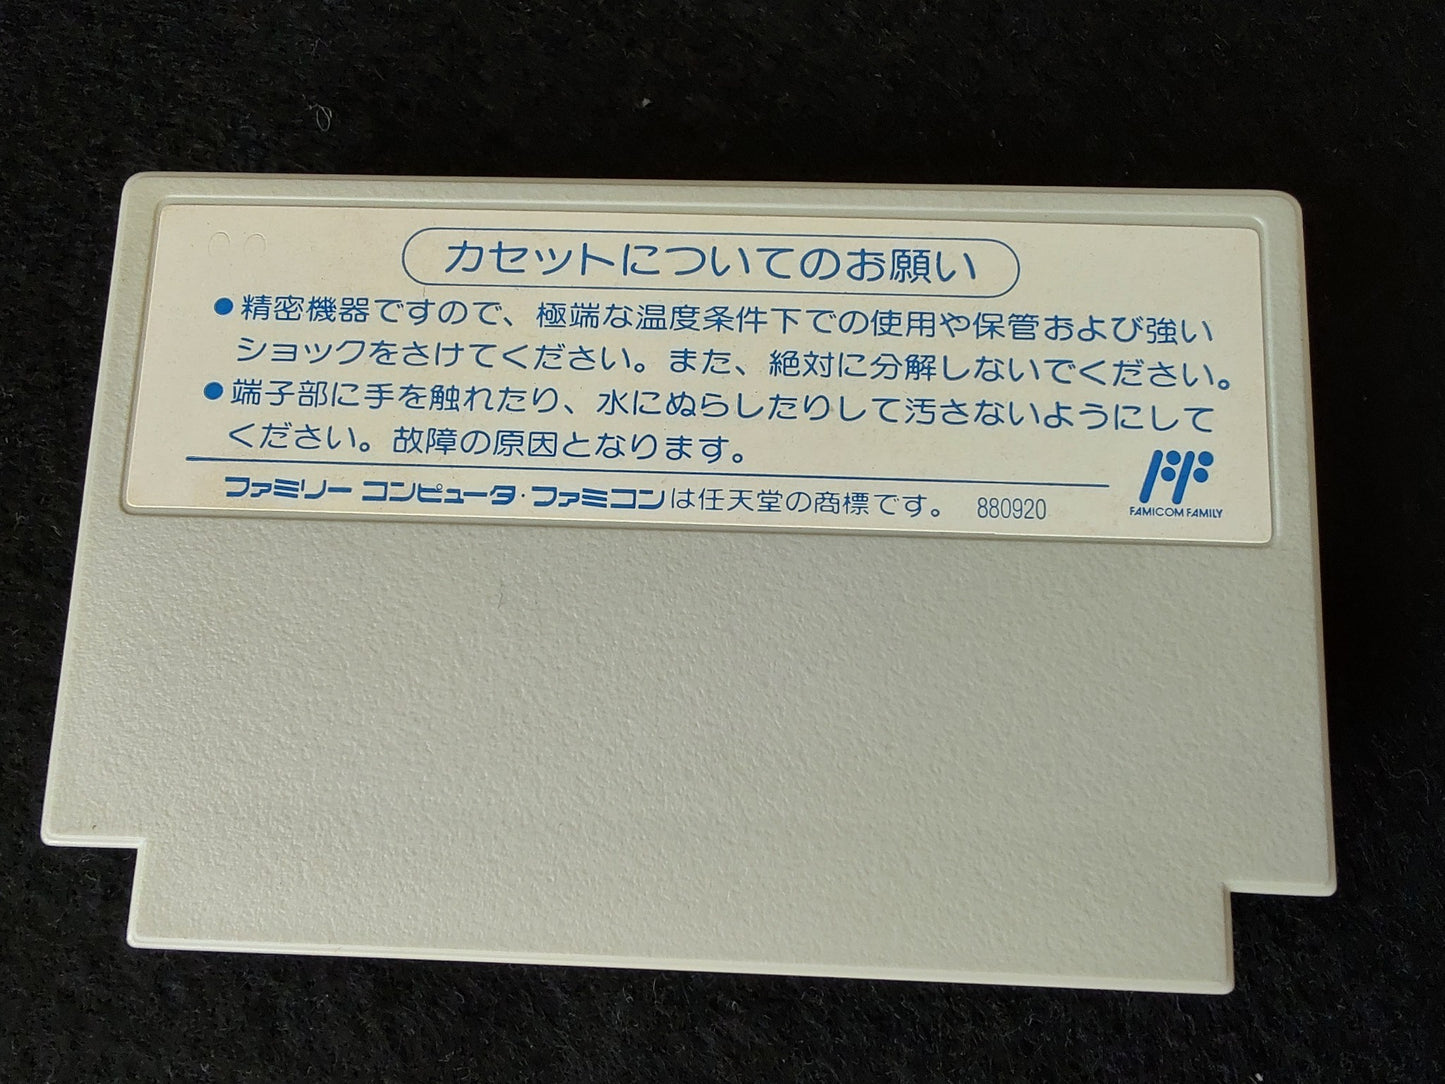 Juuryoku Soukou Metal Storm Nintendo FAMICOM(NES) Cartridge and Manual set-f1018